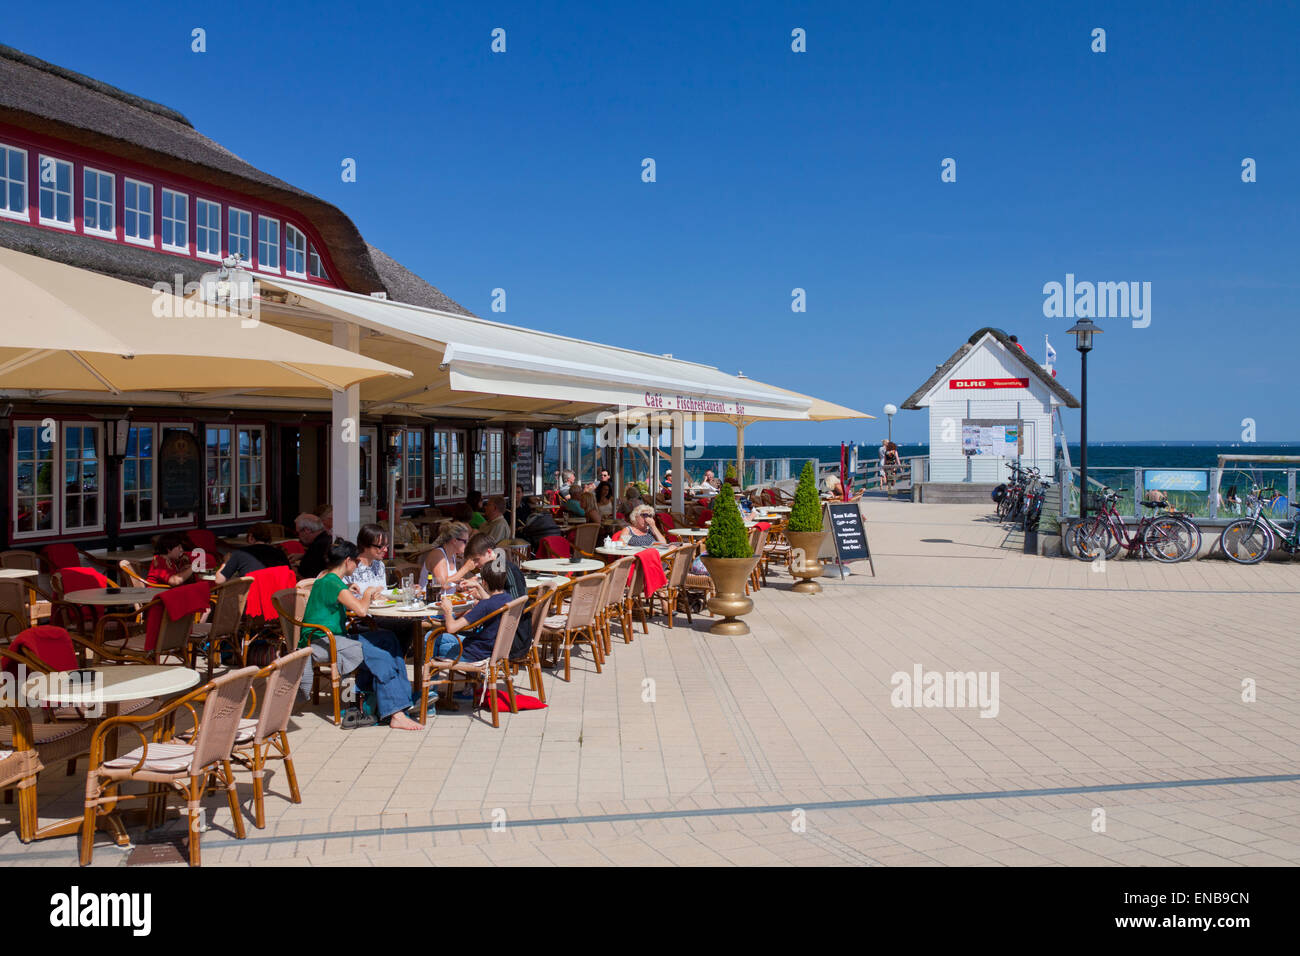 Caffetteria Ristorante lungo la passeggiata a mare resort Haffkrug, Scharbeutz, Schleswig-Holstein, Germania Foto Stock